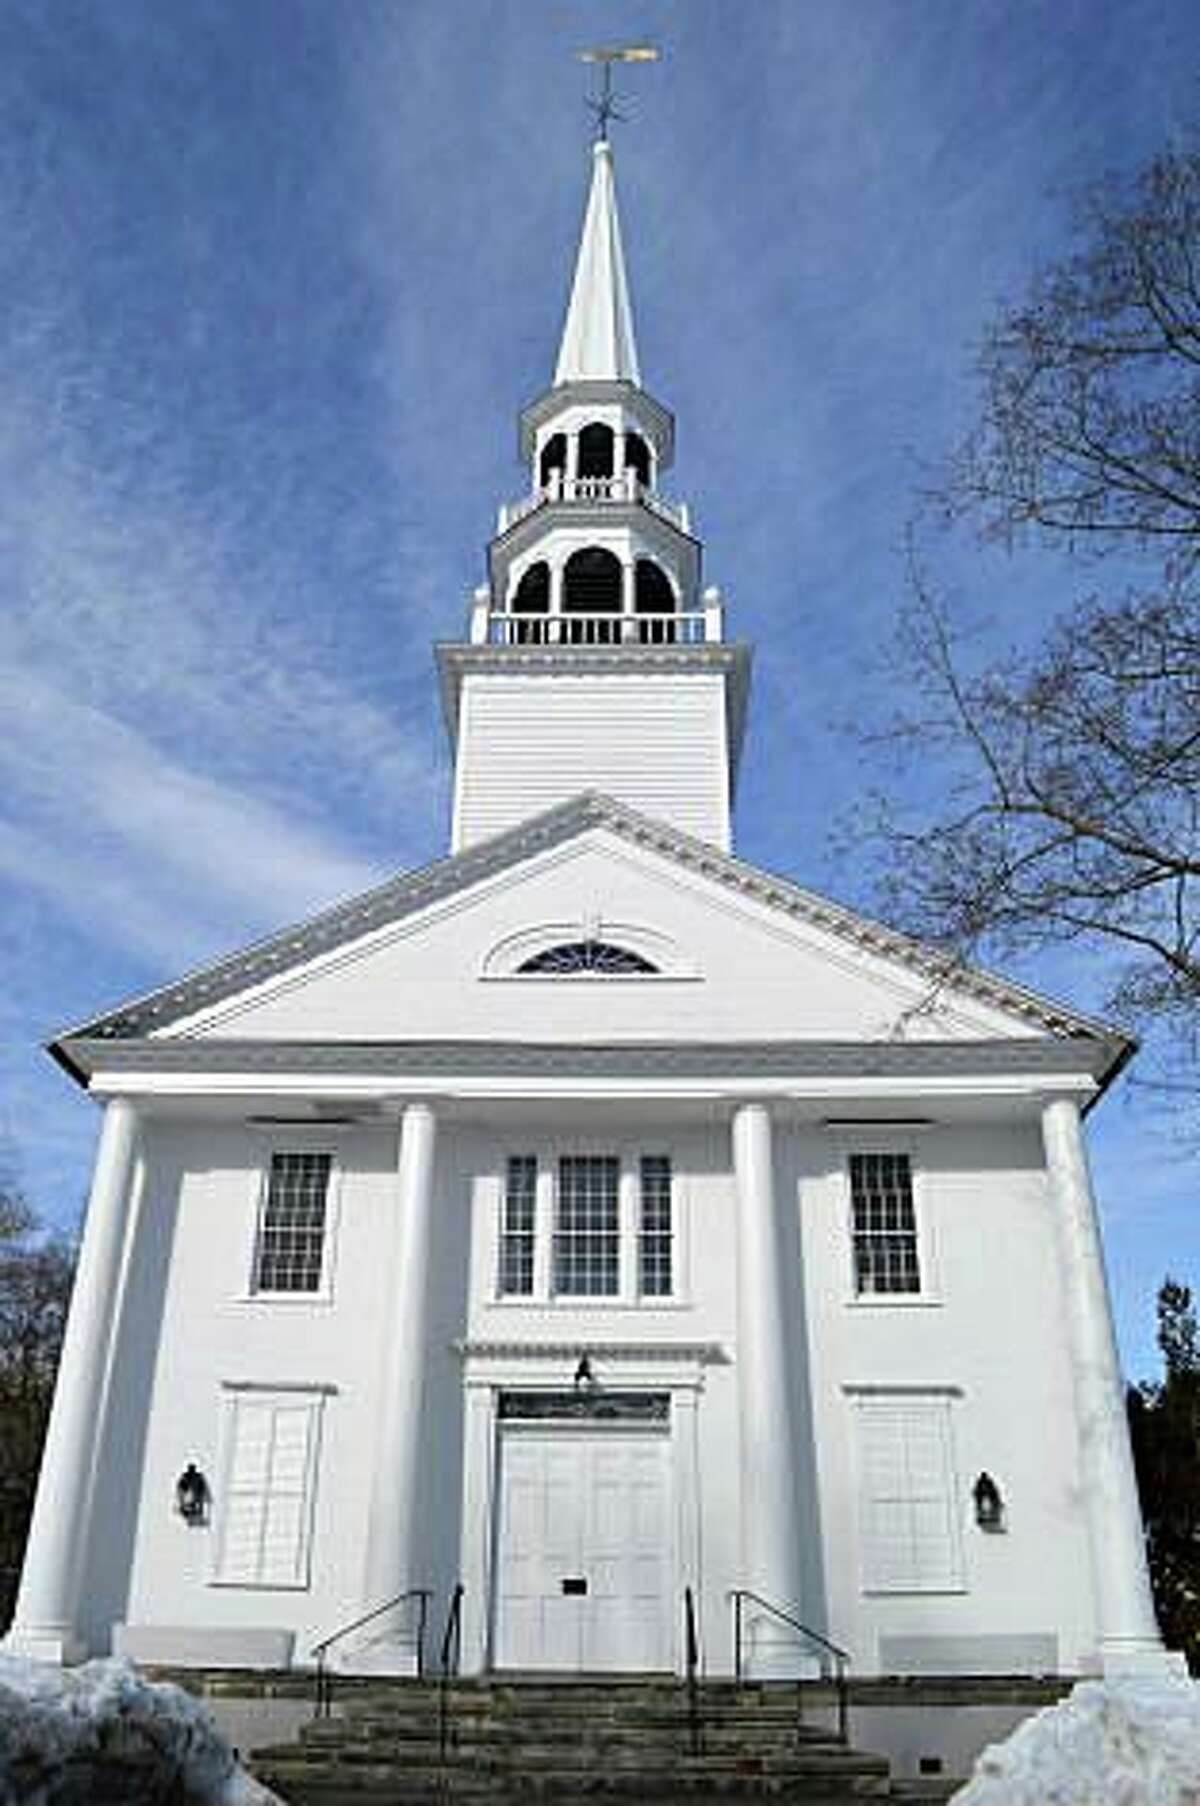 Saugatuck Congregational Church, built in 1832, has been fully restored following a devastating fire in November 2011.